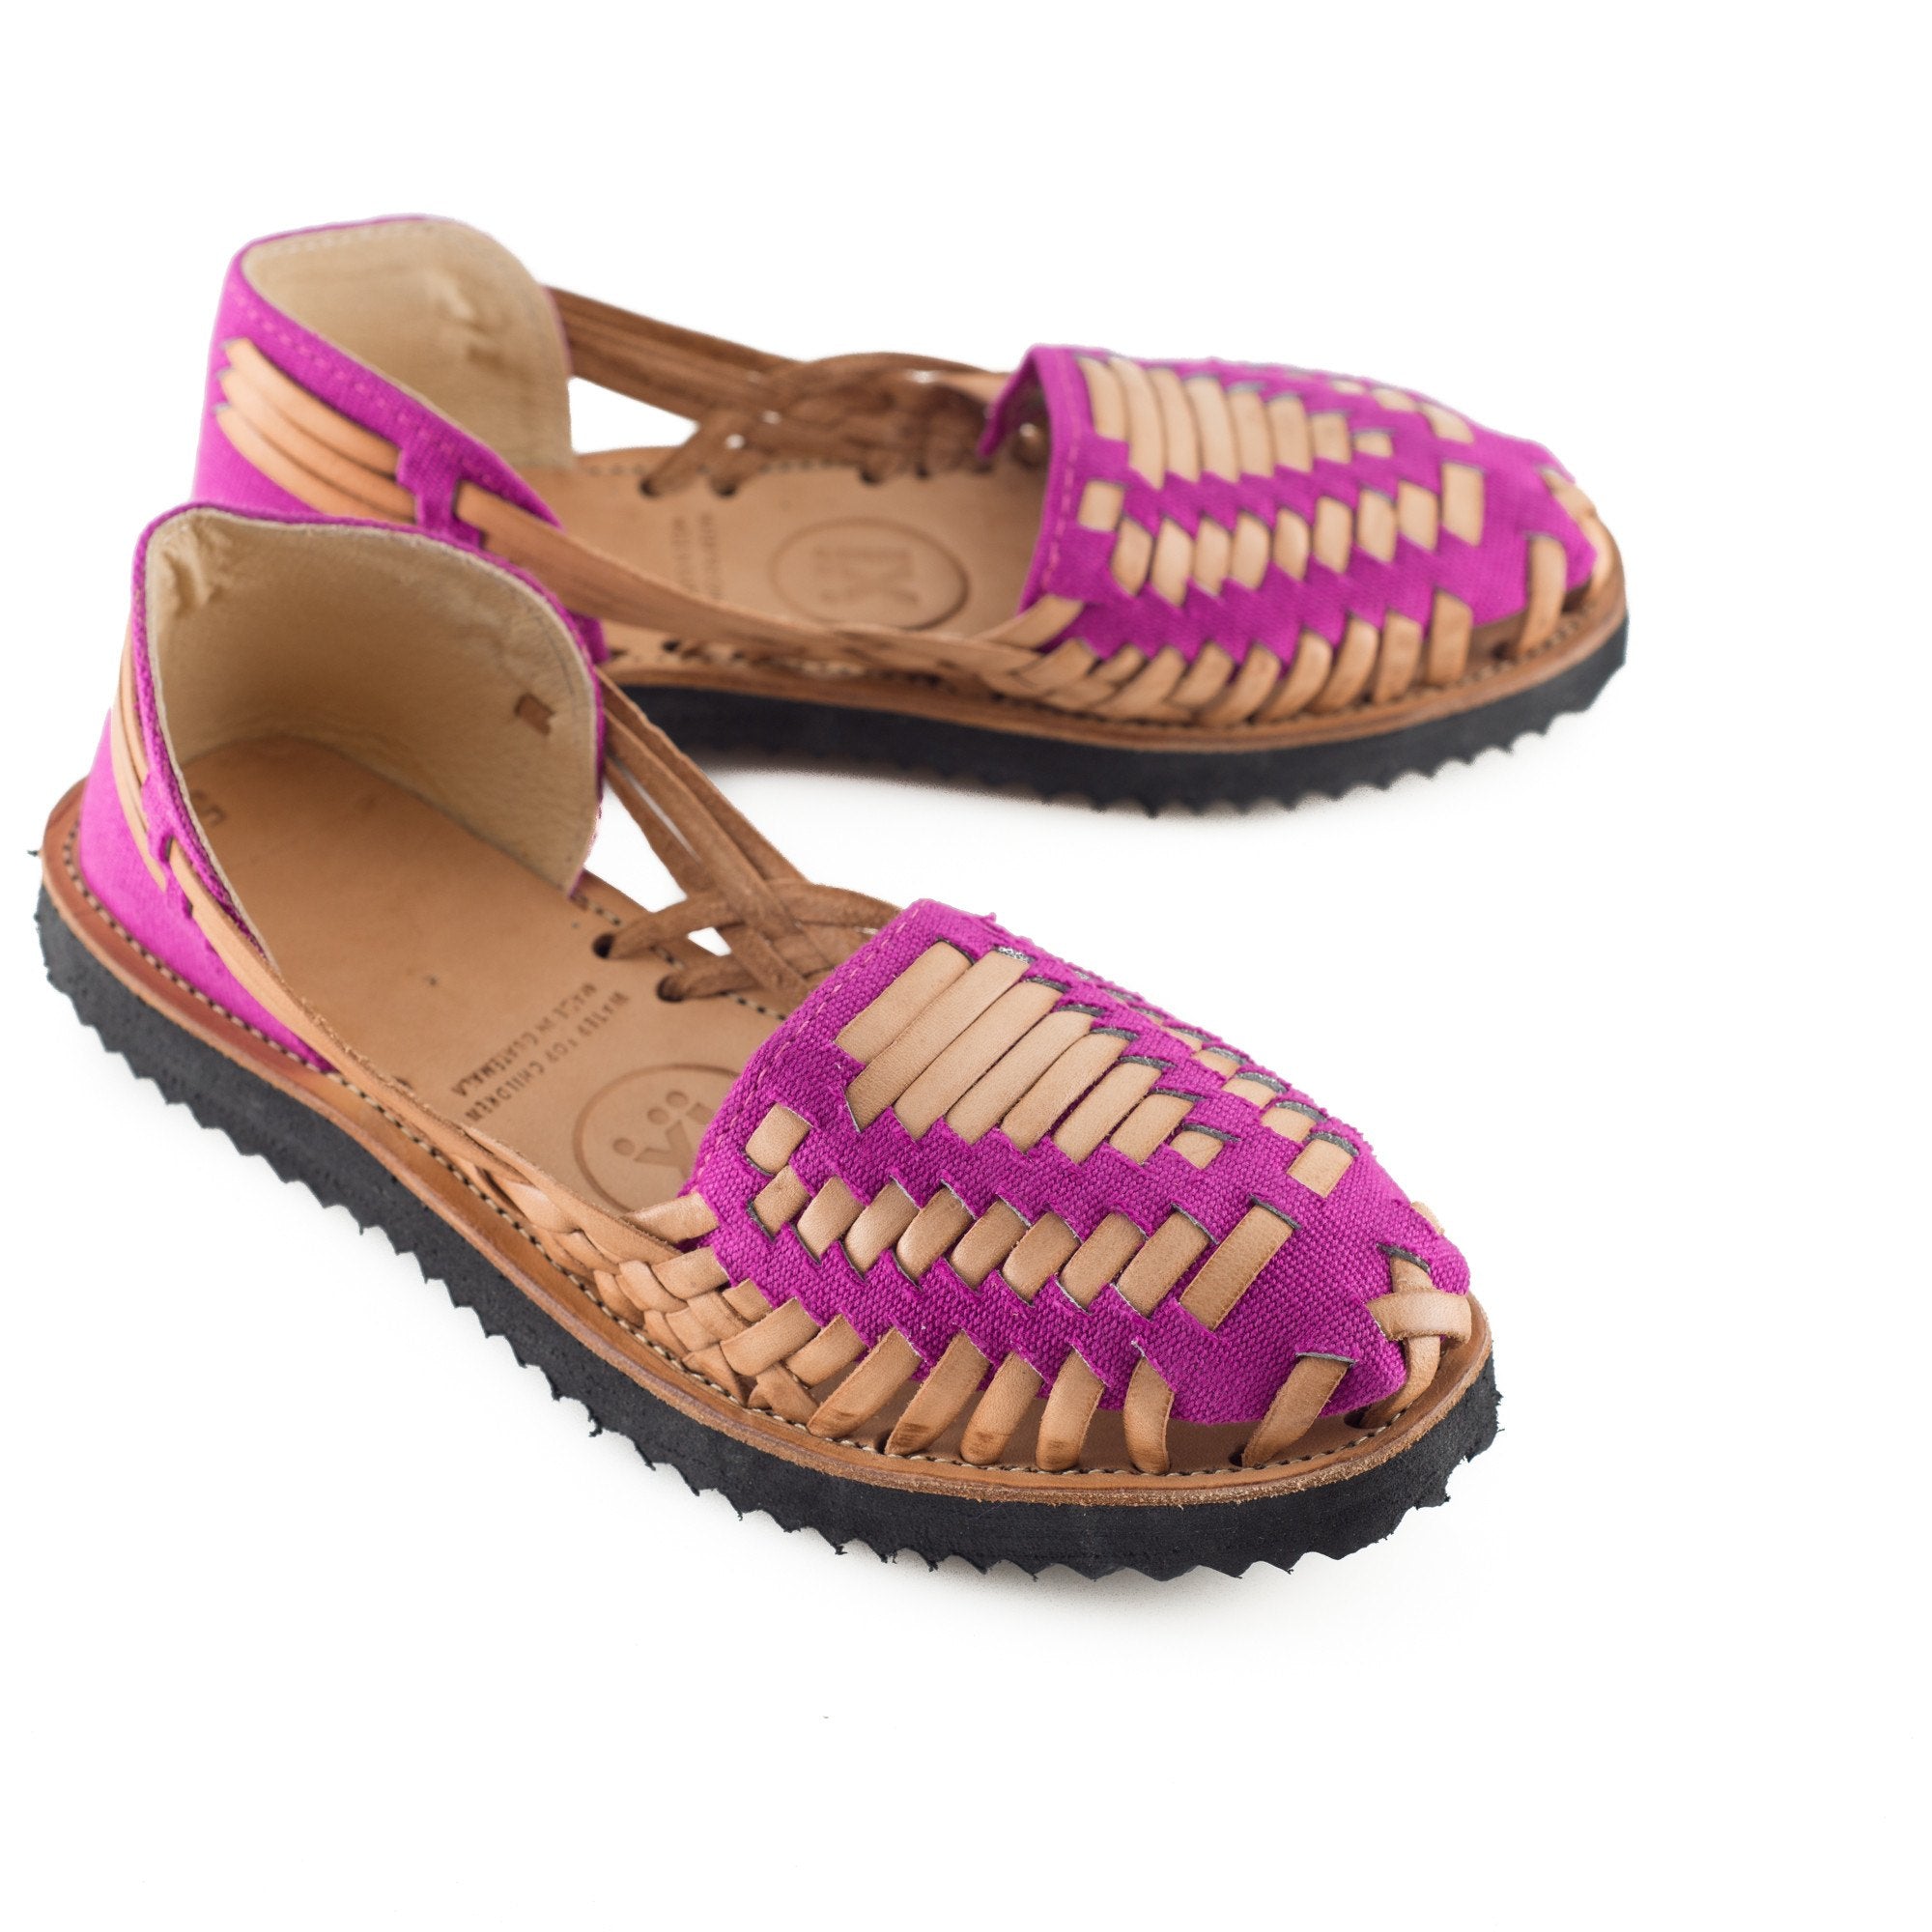 ethical huarache sandals